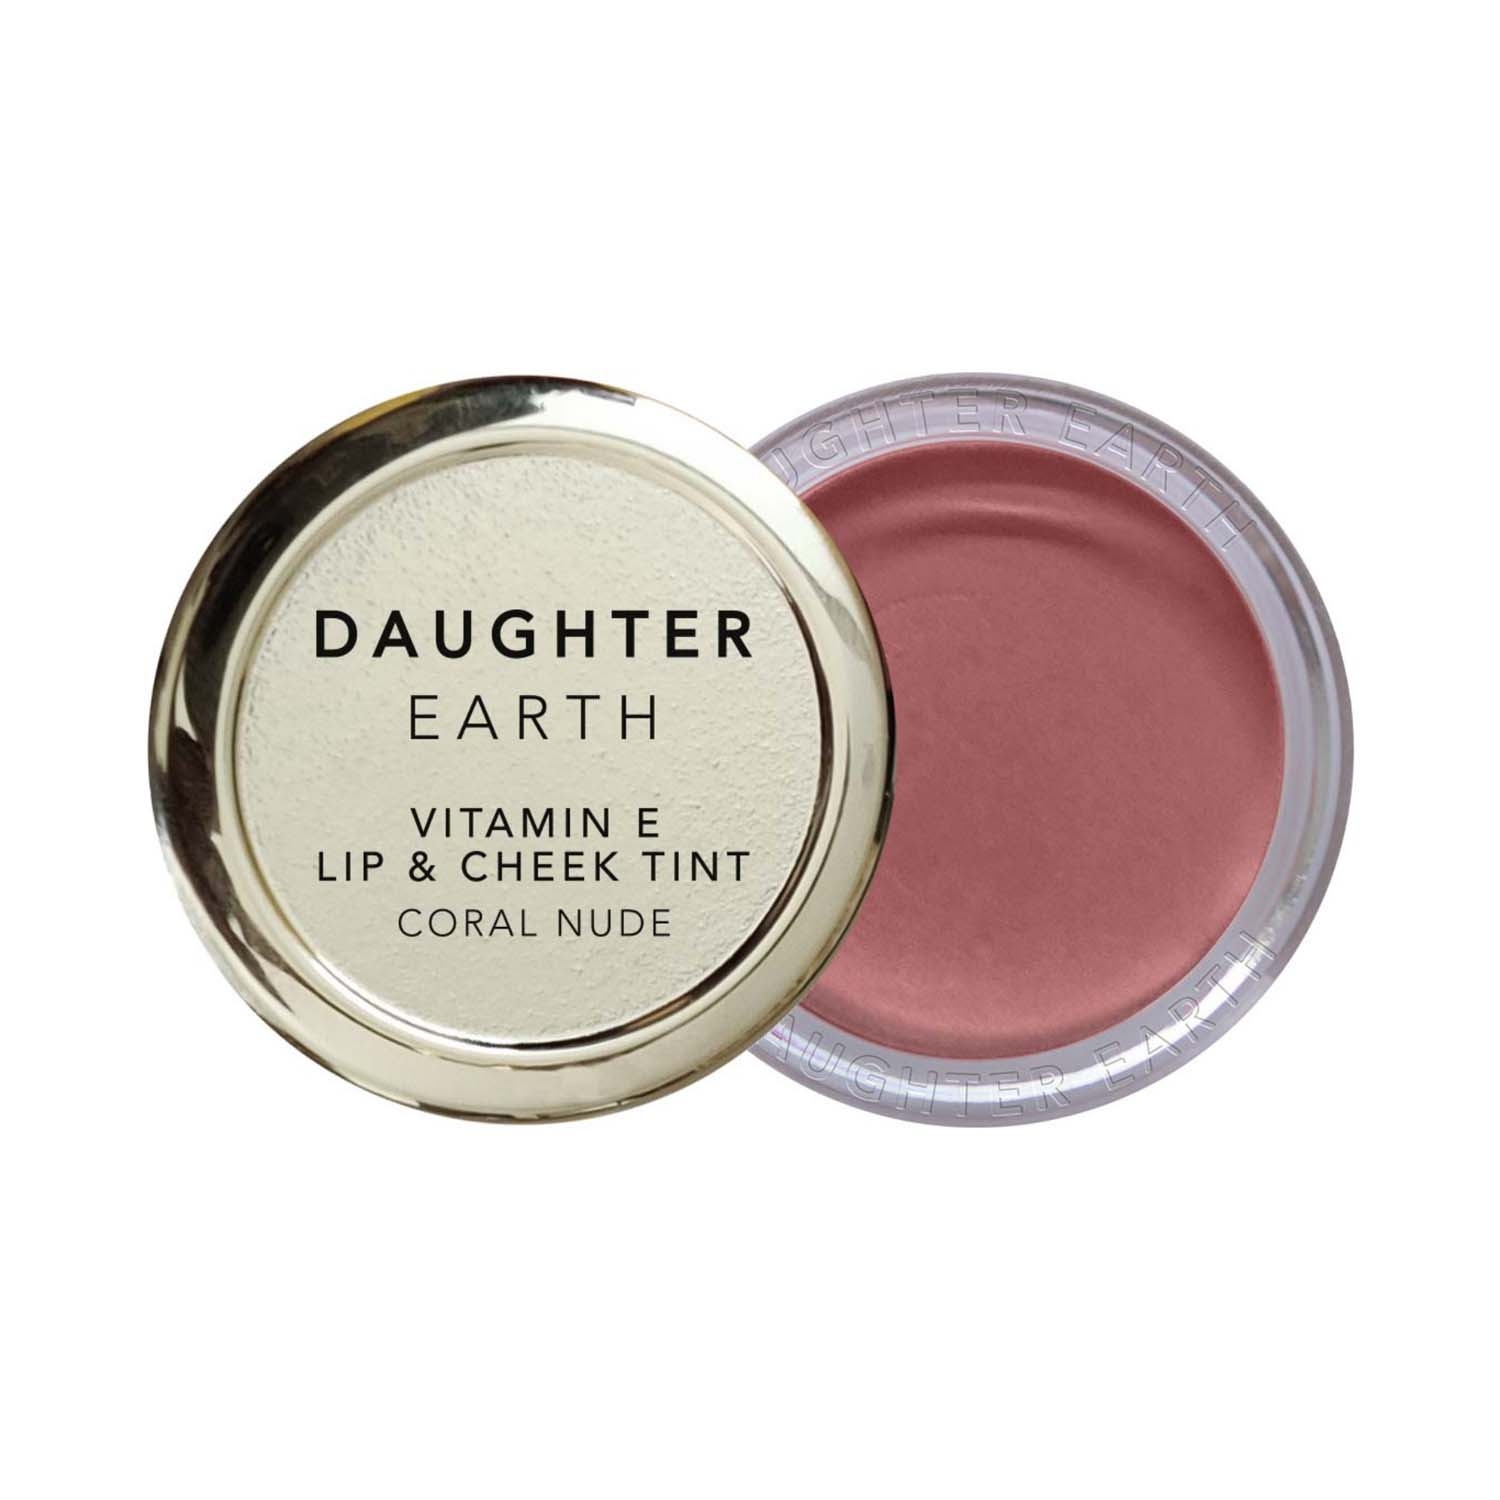 DAUGHTER EARTH | DAUGHTER EARTH Vitamin E Lip & Cheek Tint - Coral Nude (4.5g)